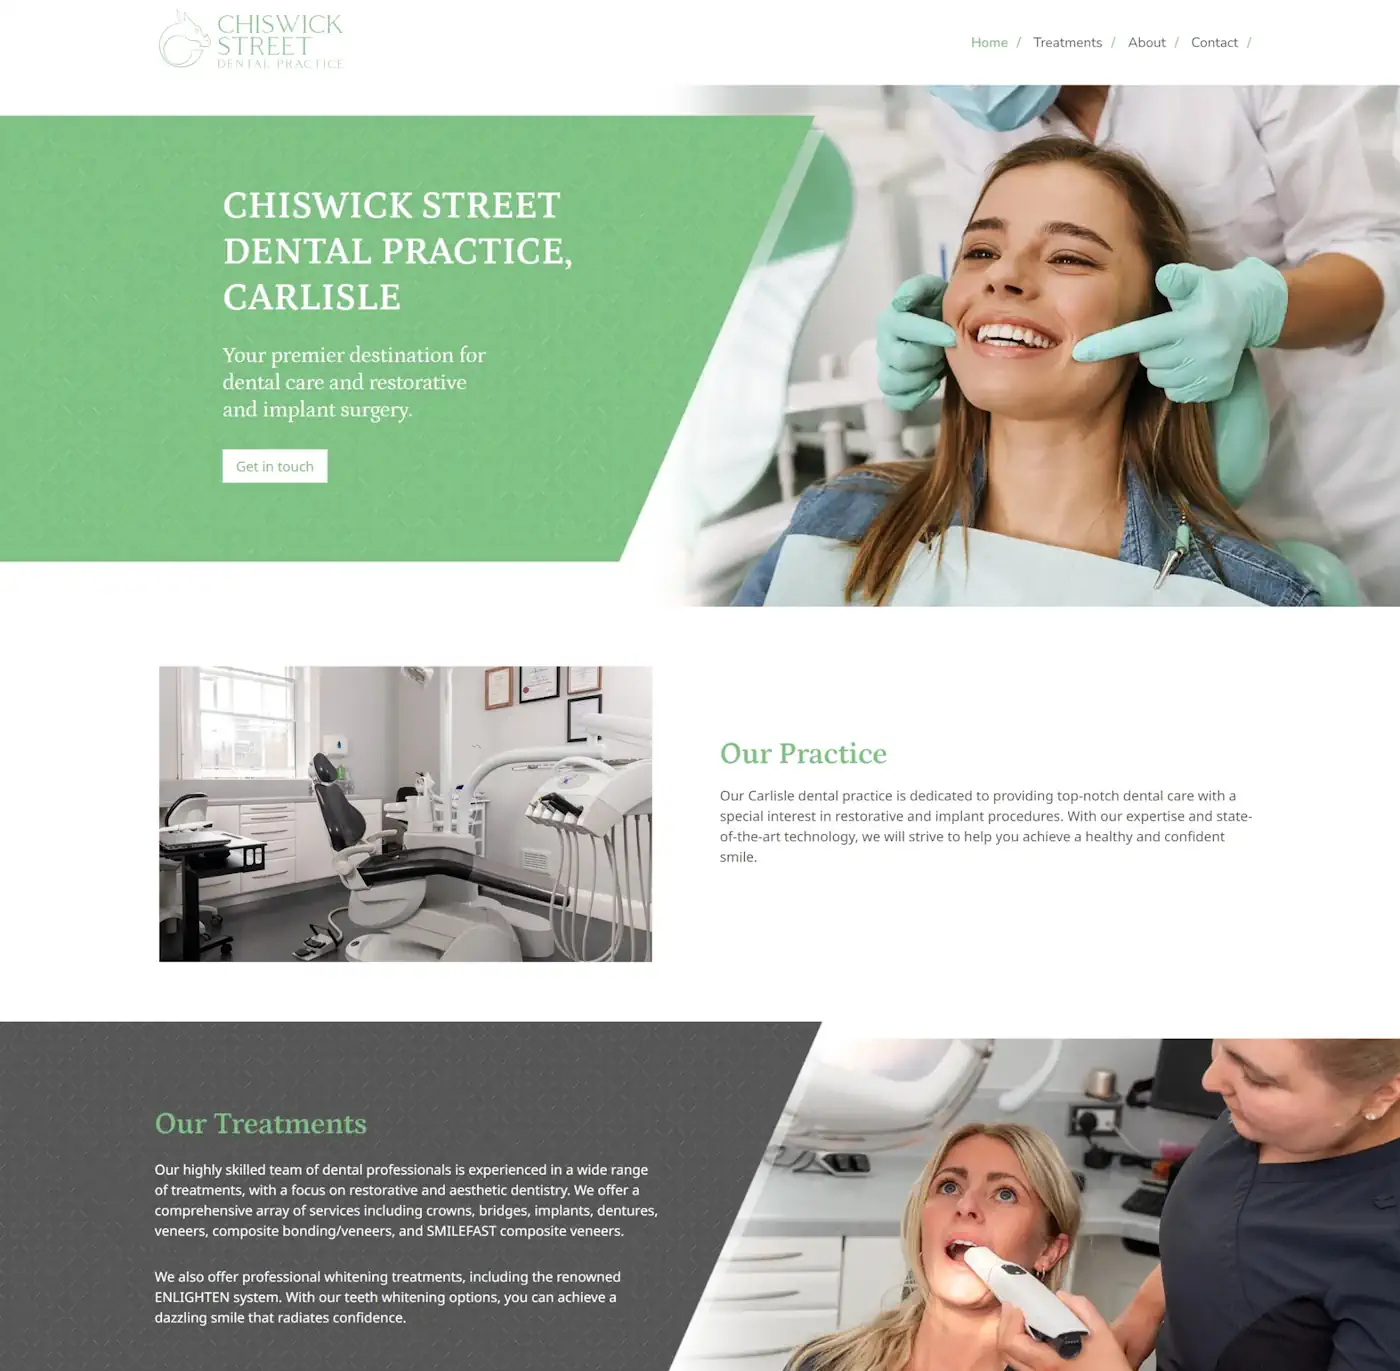 Bespoke Dental Practice Web Design in Carlisle, Cumbria